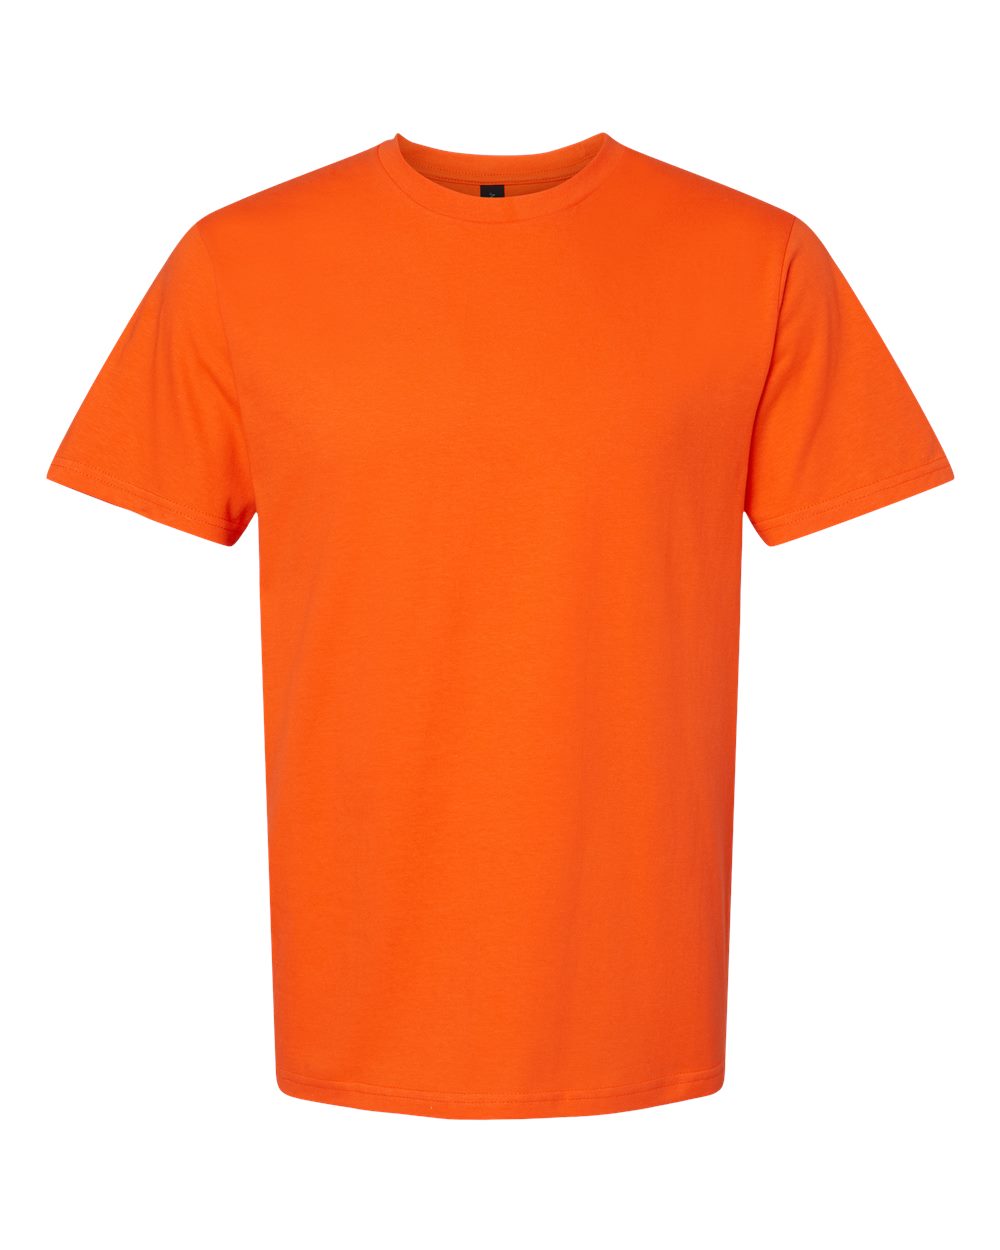 Orange - Gildan - Softstyle® - 65000